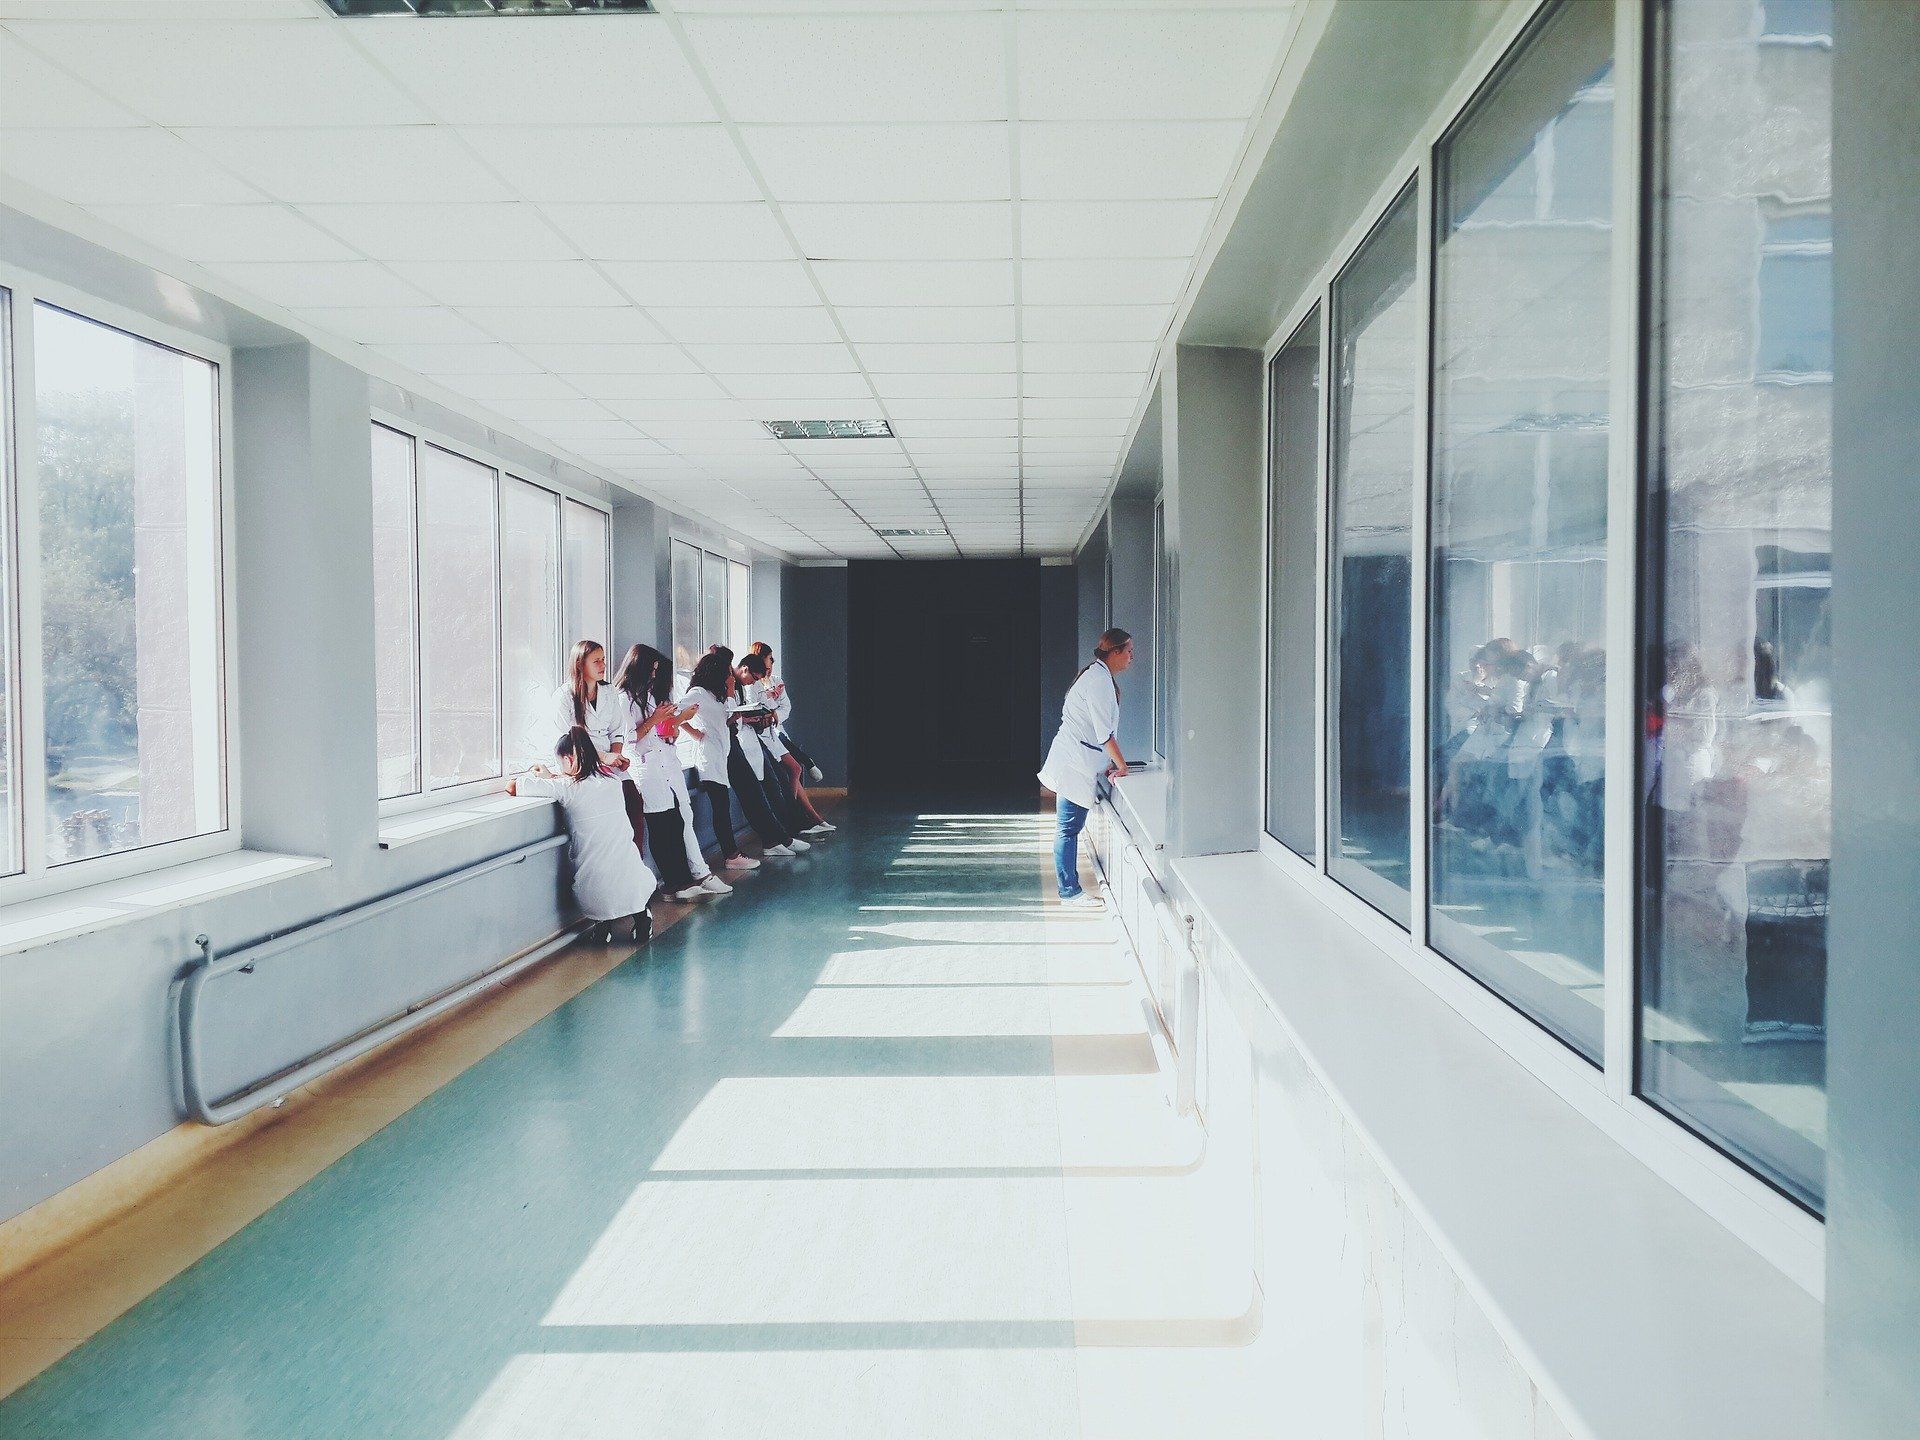 Hospital / Pixabay